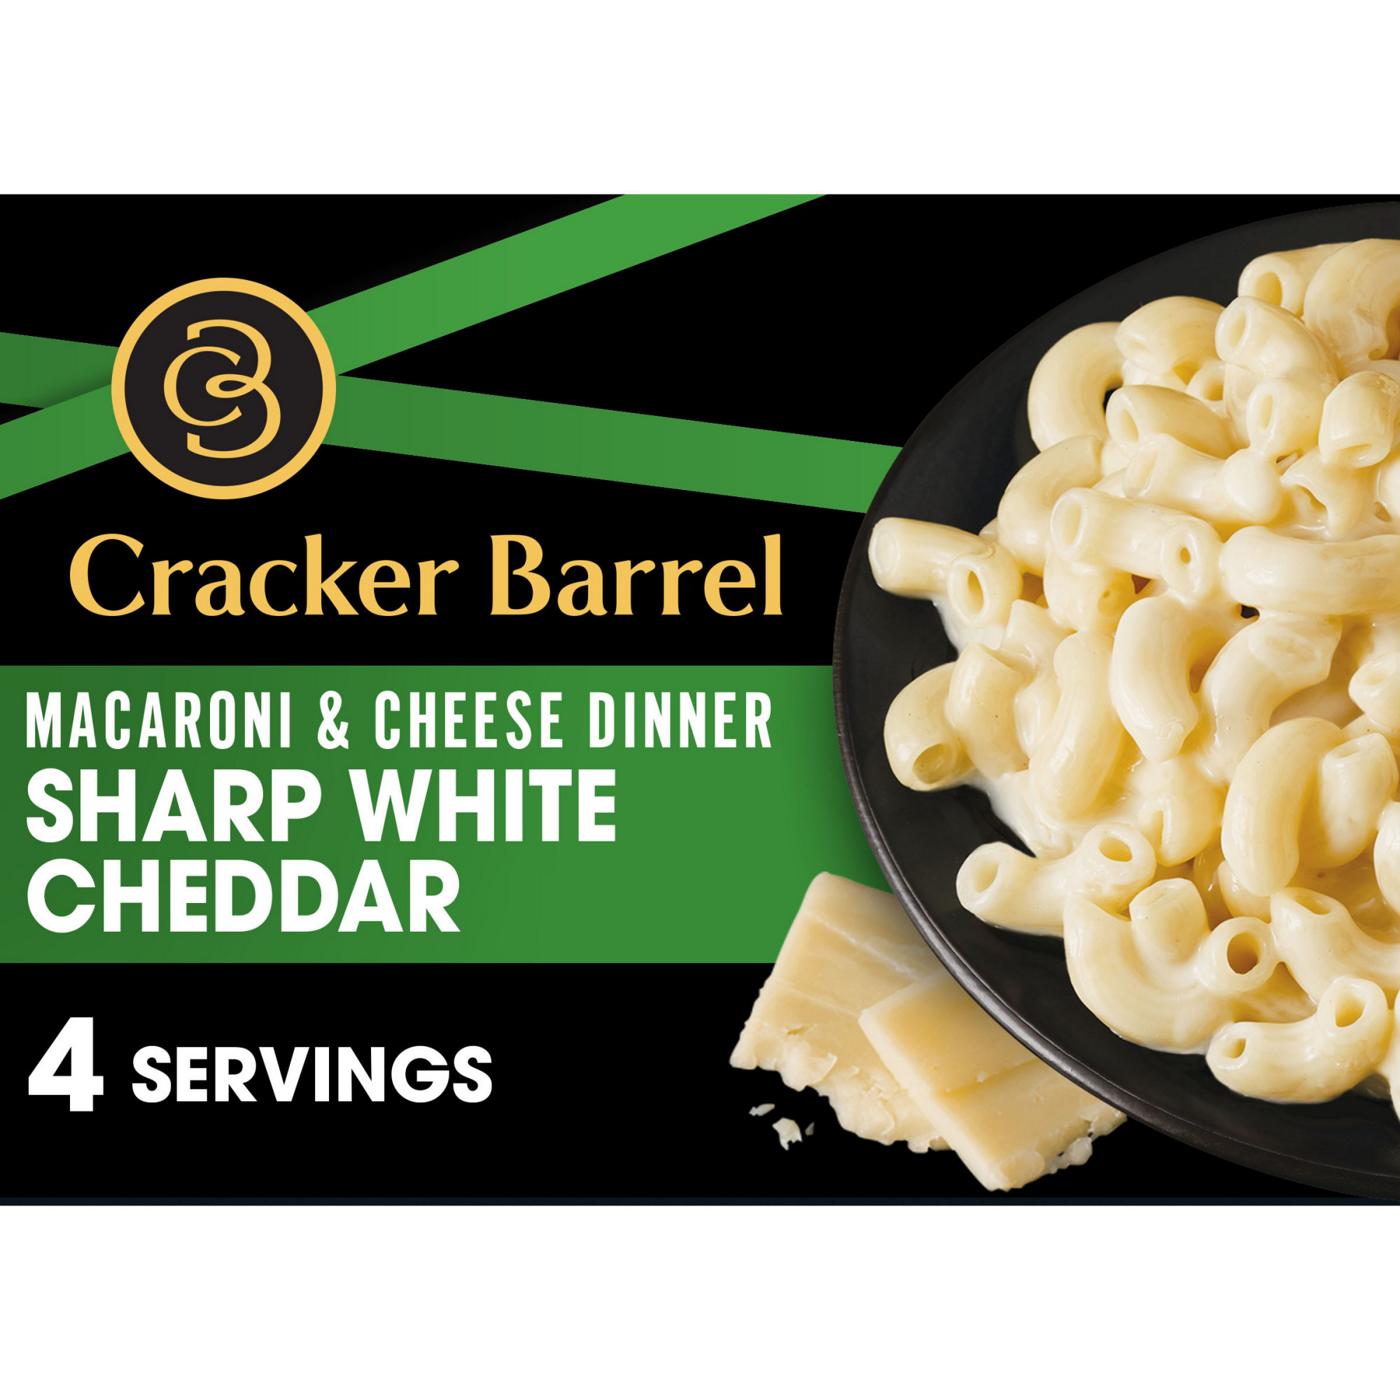 Cracker Barrel Sharp White Cheddar Macaroni & Cheese Dinner; image 1 of 9